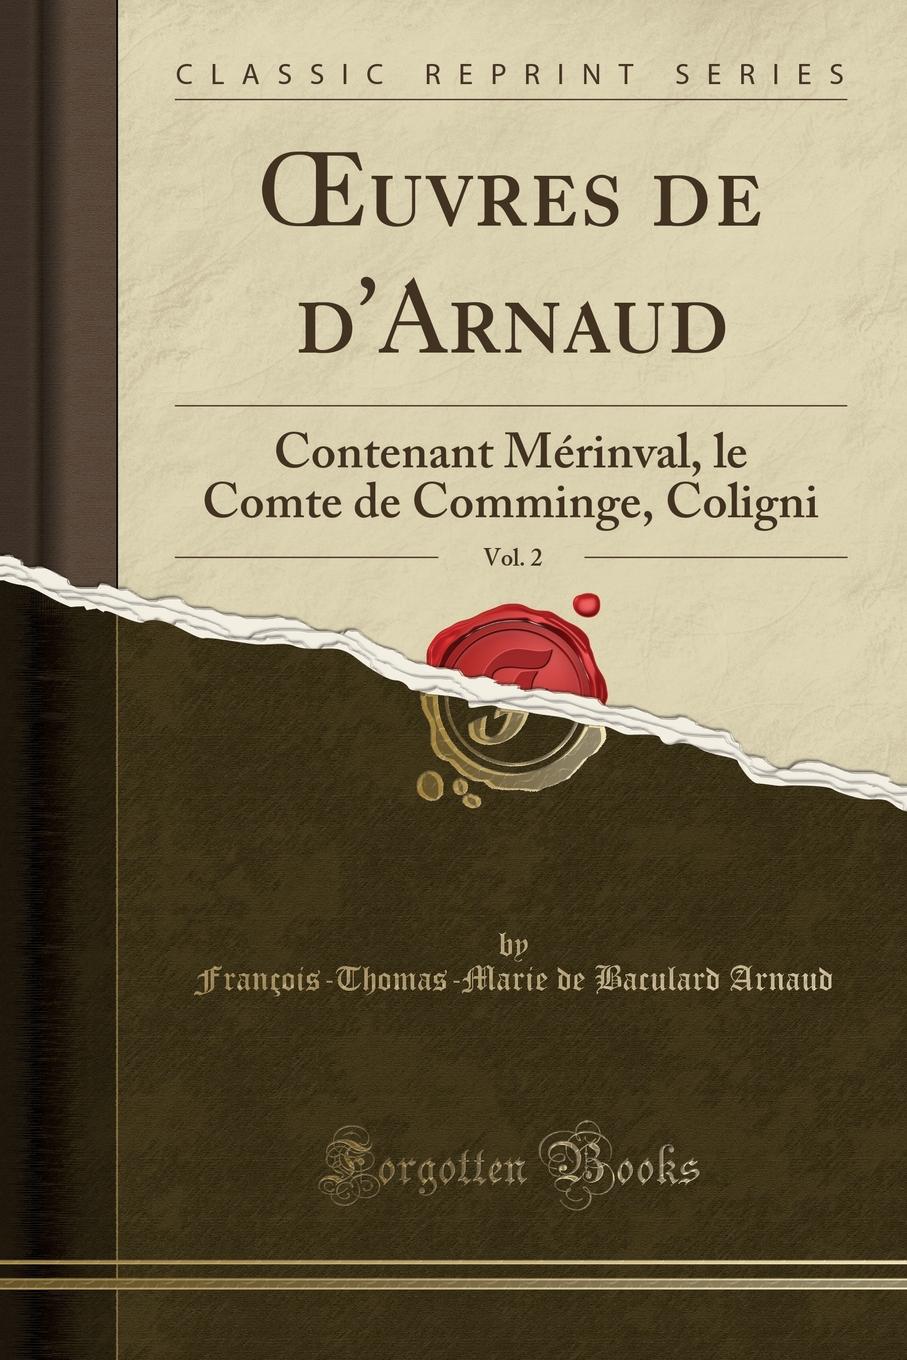 François-Thomas-Marie de Bacula Arnaud OEuvres de d.Arnaud, Vol. 2. Contenant Merinval, le Comte de Comminge, Coligni (Classic Reprint)